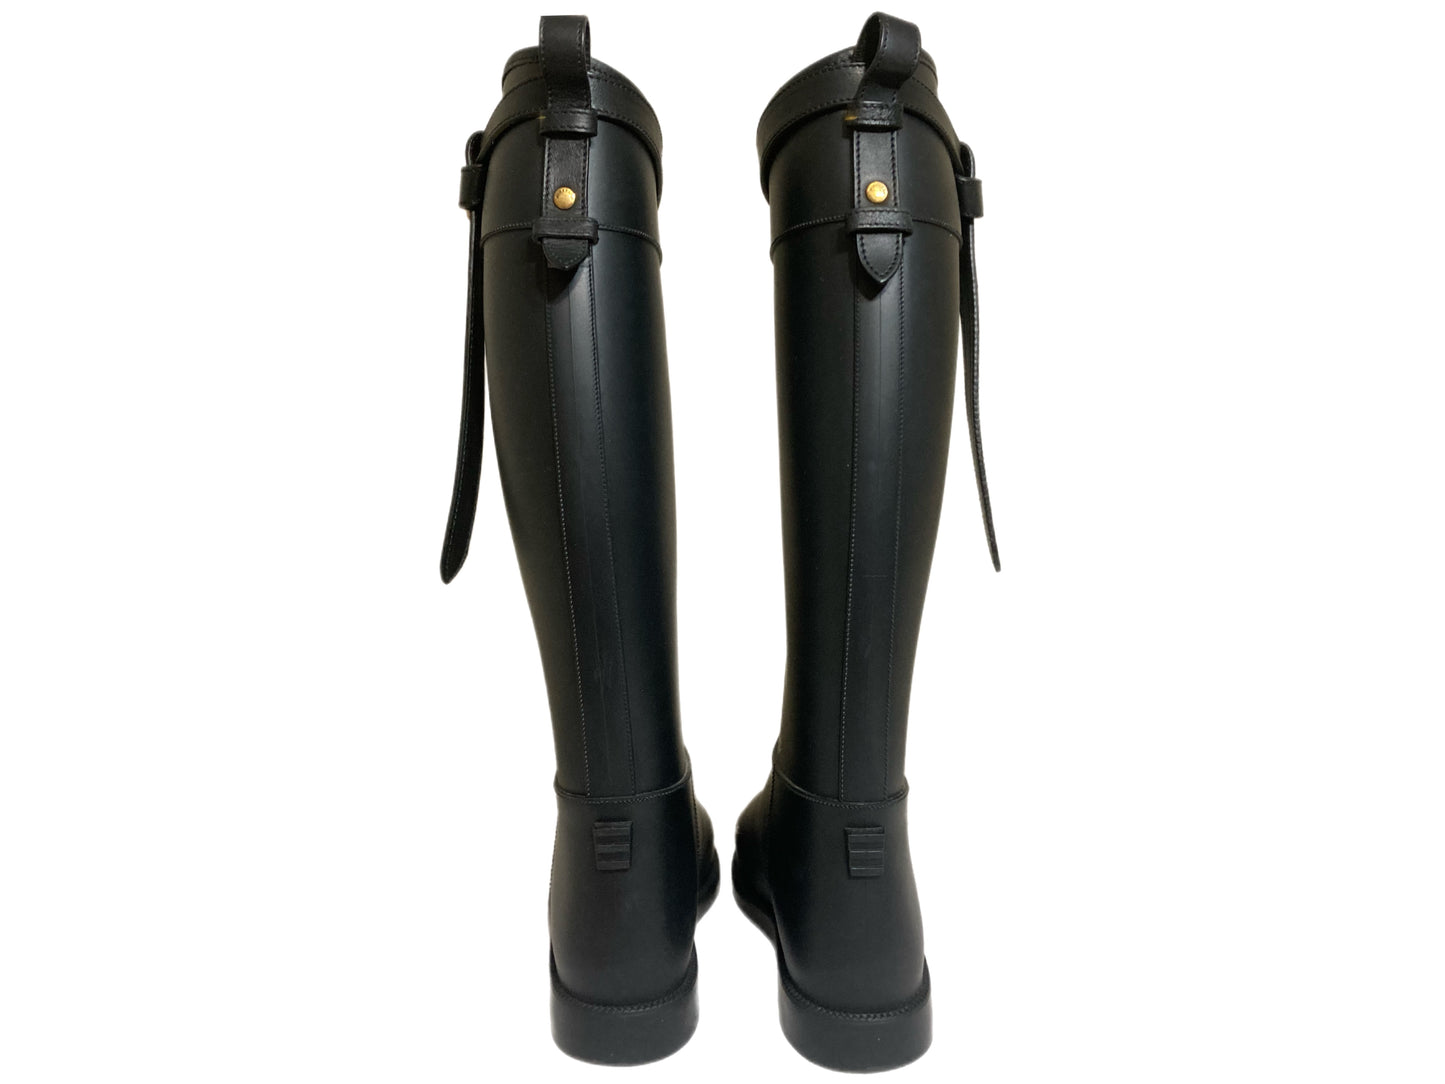 BURBERRY Tall Rubber Rain Boots Black Size 40